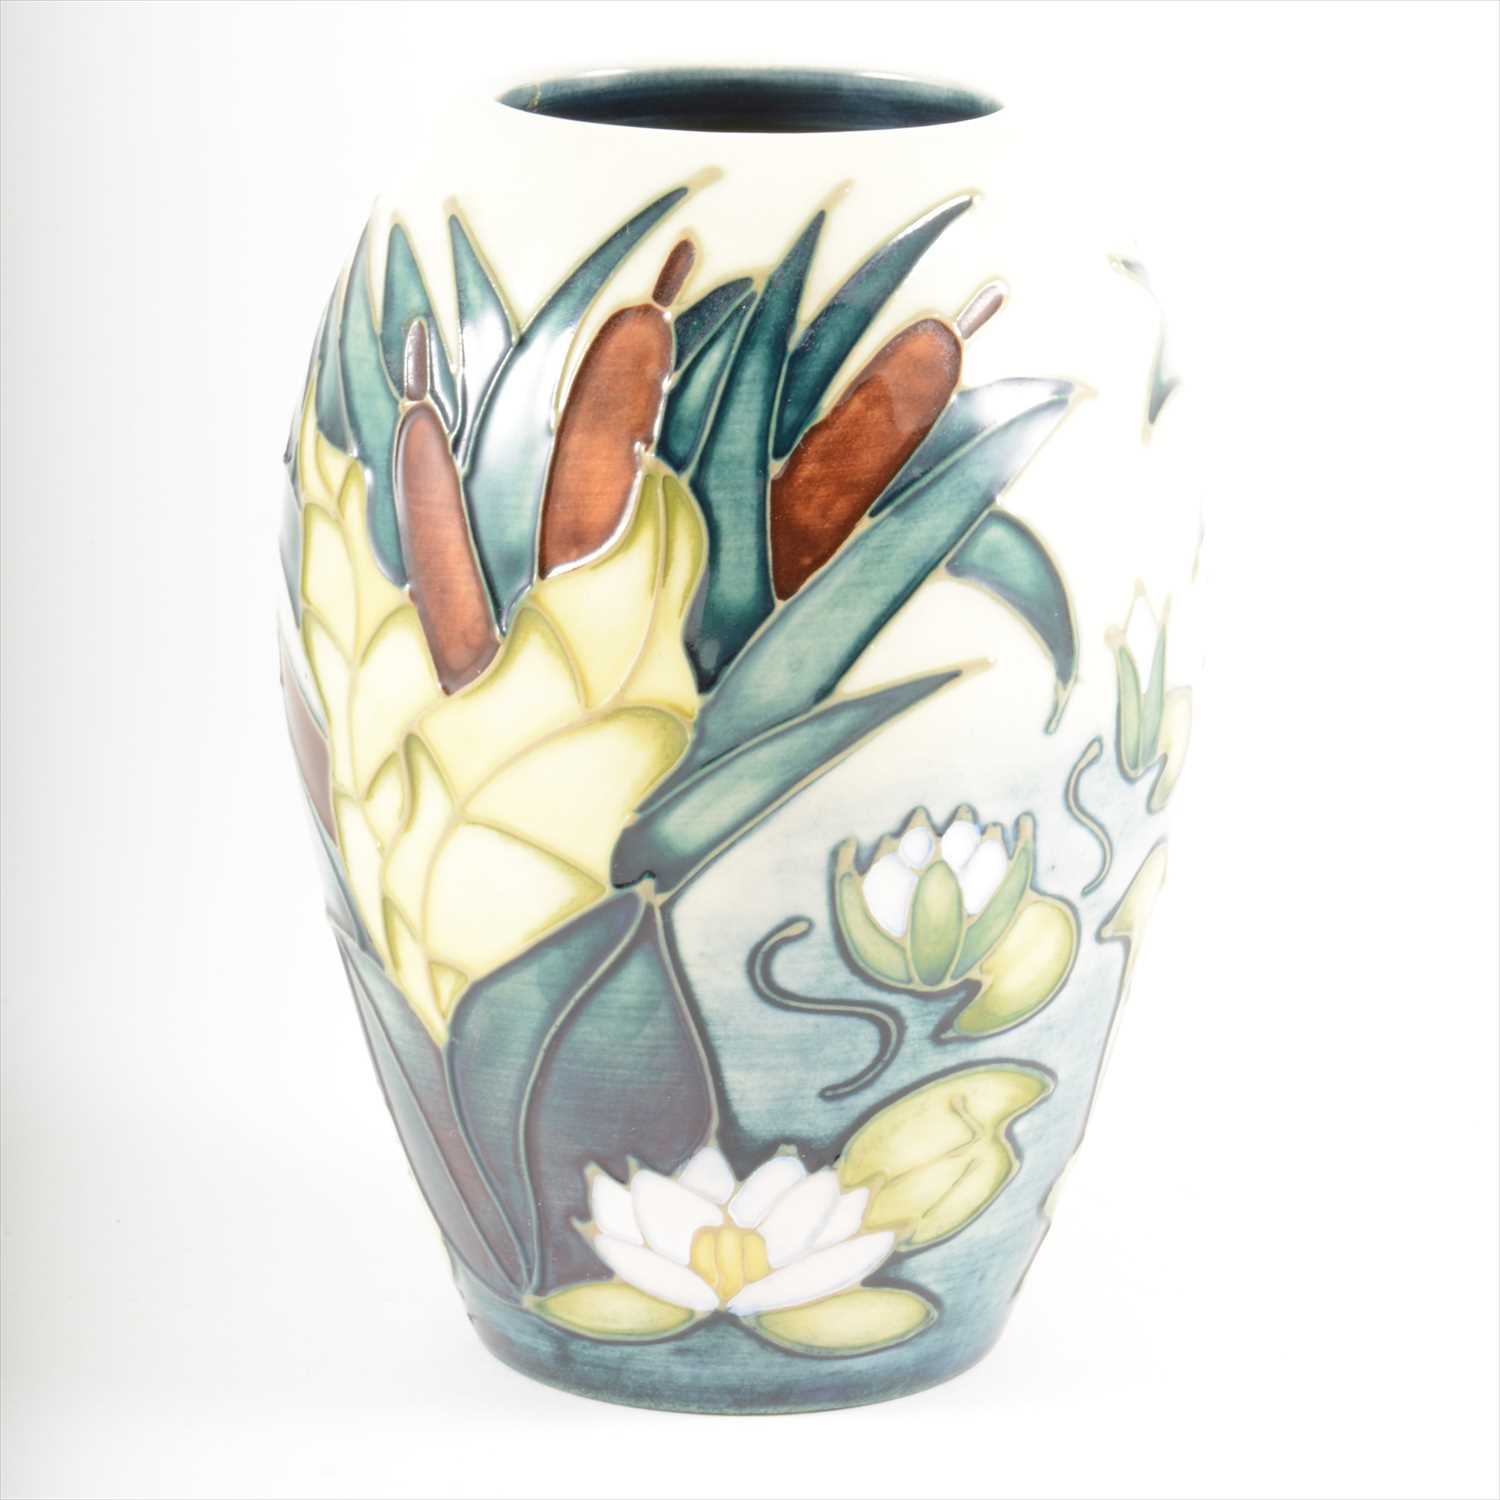 Lot 47 - A 'Lamia' design vase, by Rachel Bishop for Moorcroft Pottery, 1996.